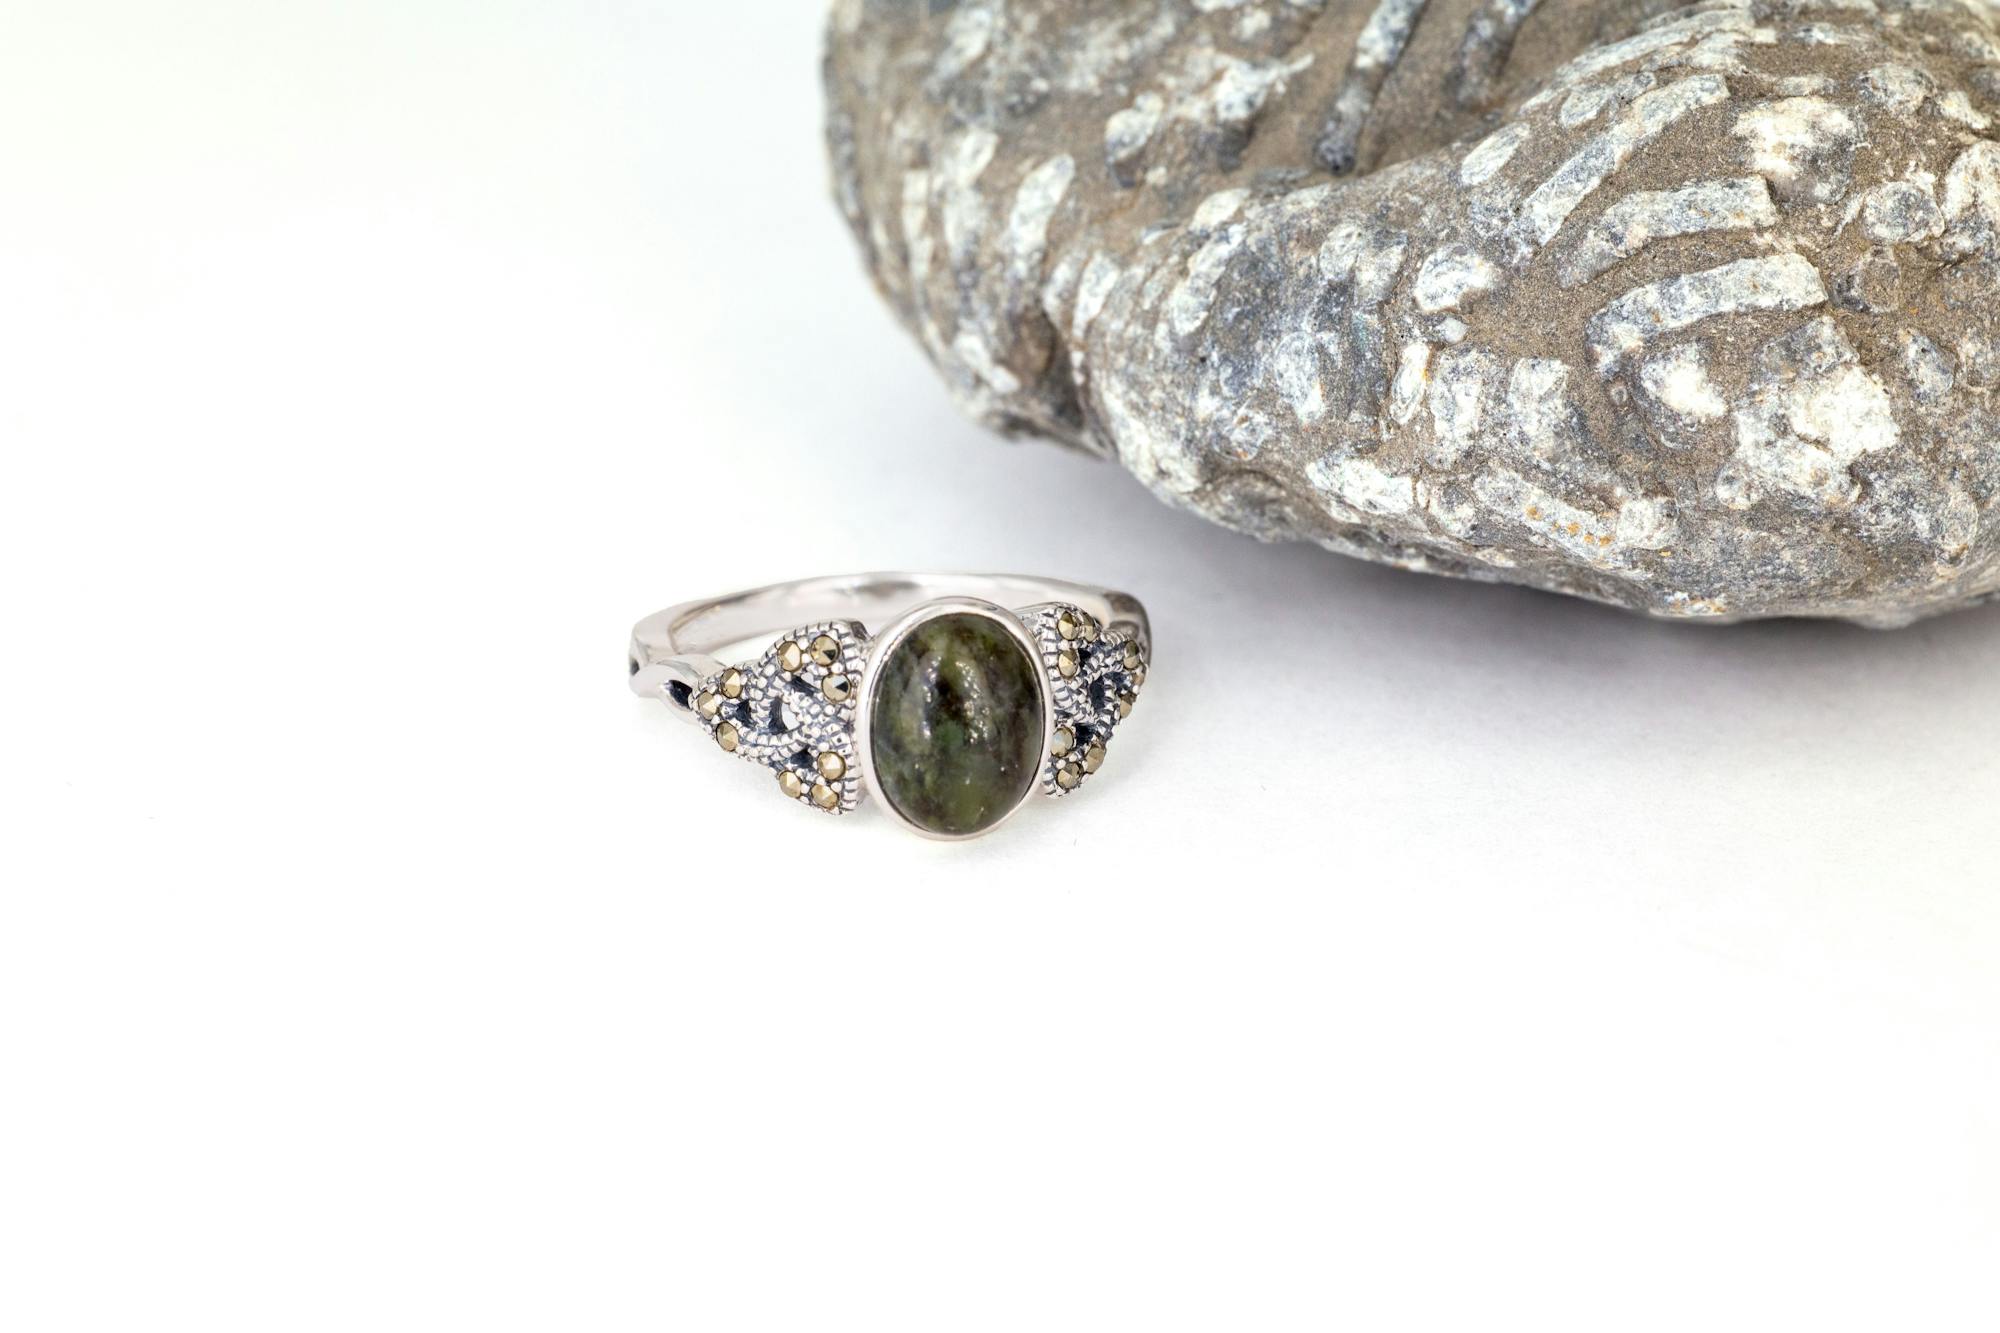 Trinity Knot Connemara Marble Ring, From Ireland | My Irish Jeweler